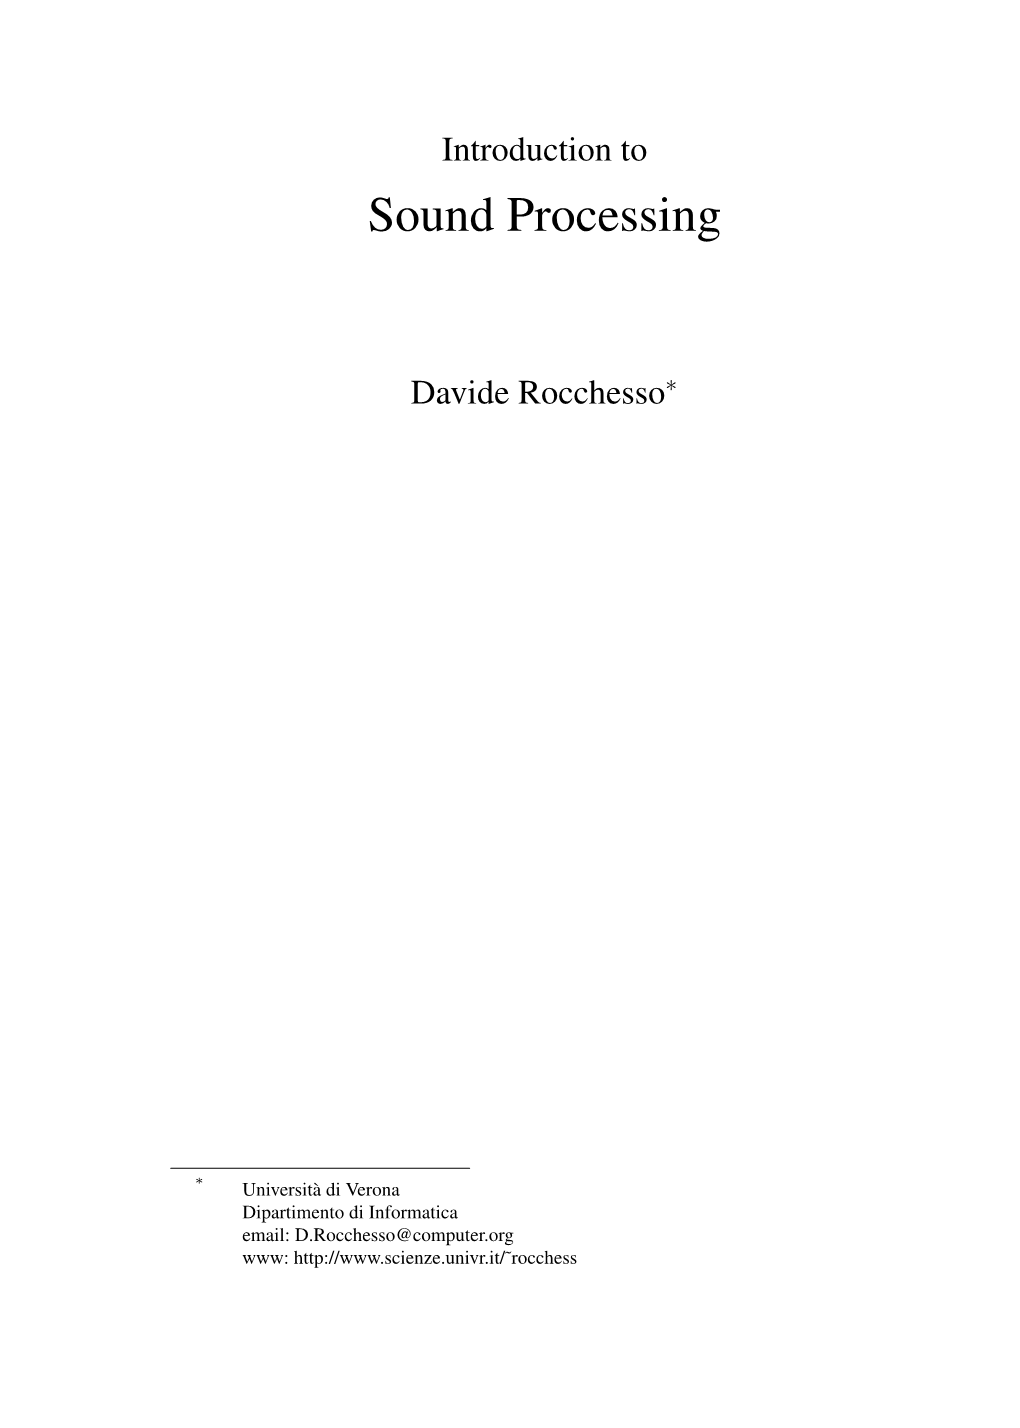 Sound Processing